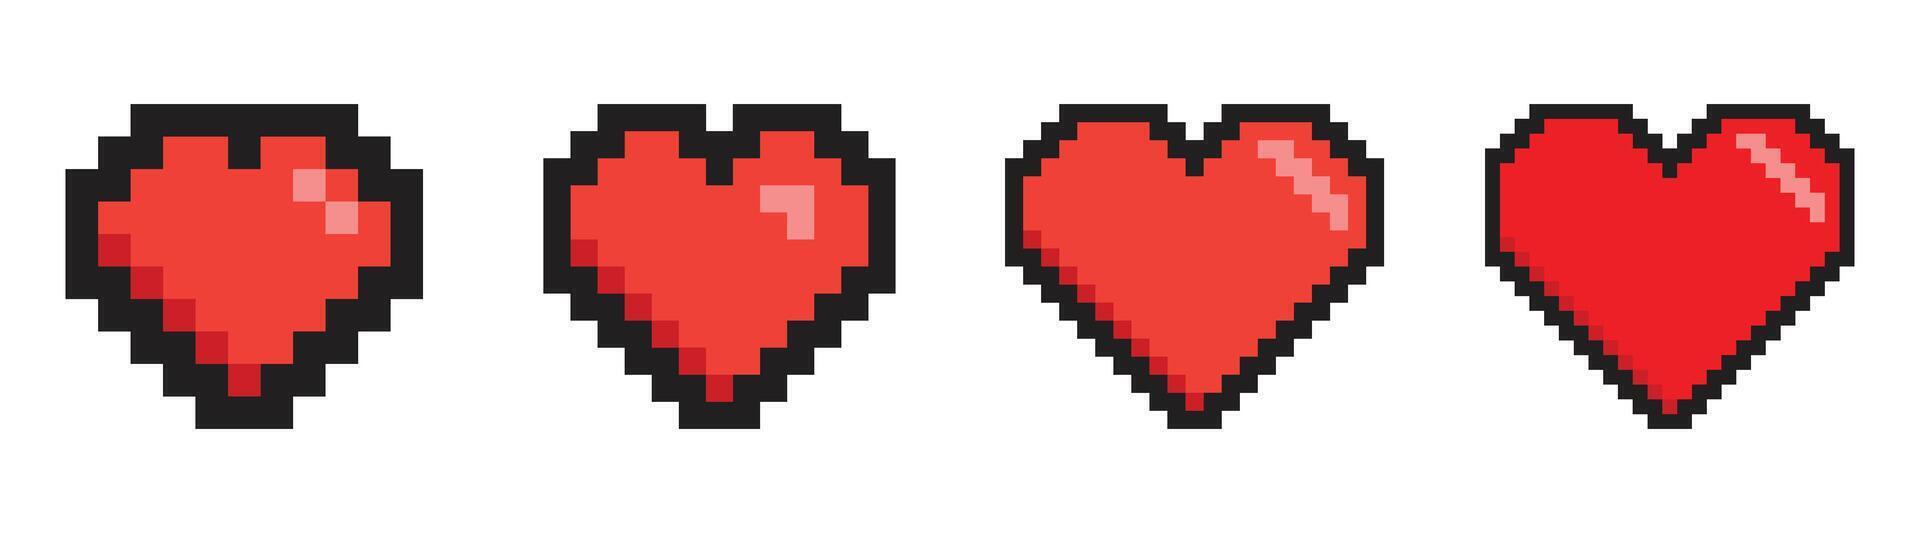 heart love pixelated icon vector video game, 8 bit, life symbol